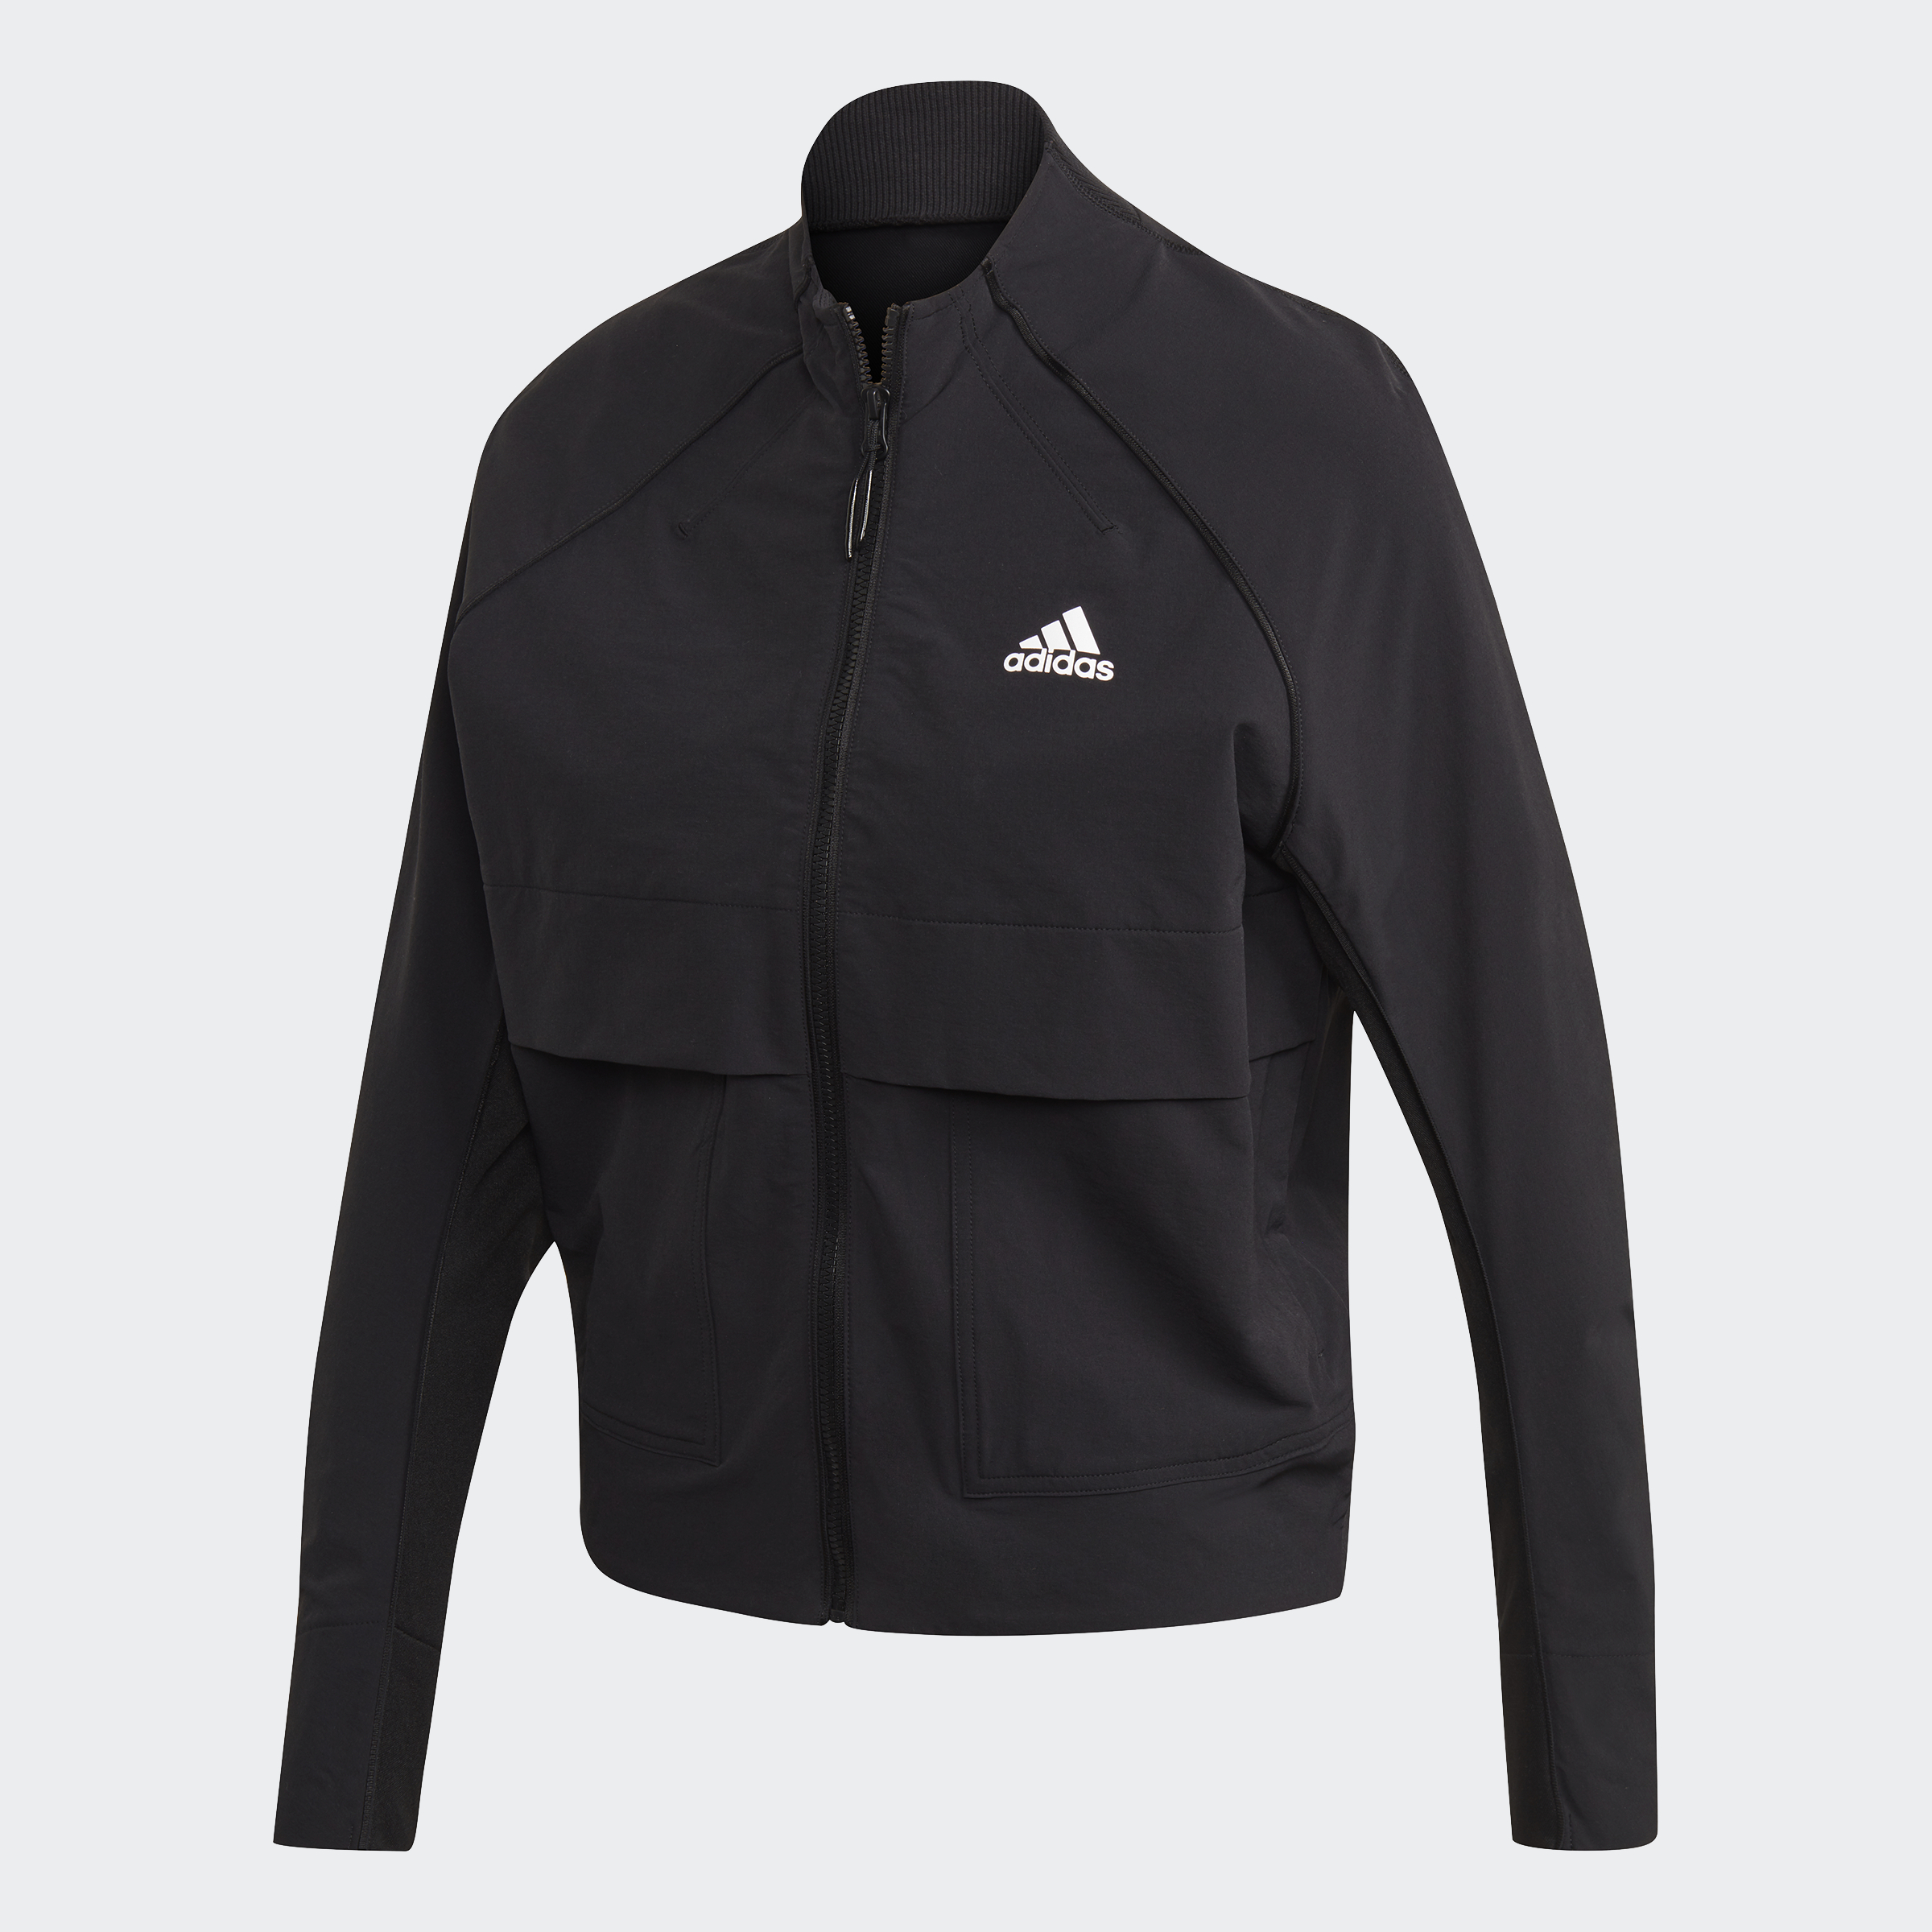 adidas NOT SPORTS SPECIFIC VRCT Woven Jacket Women Black FS2404